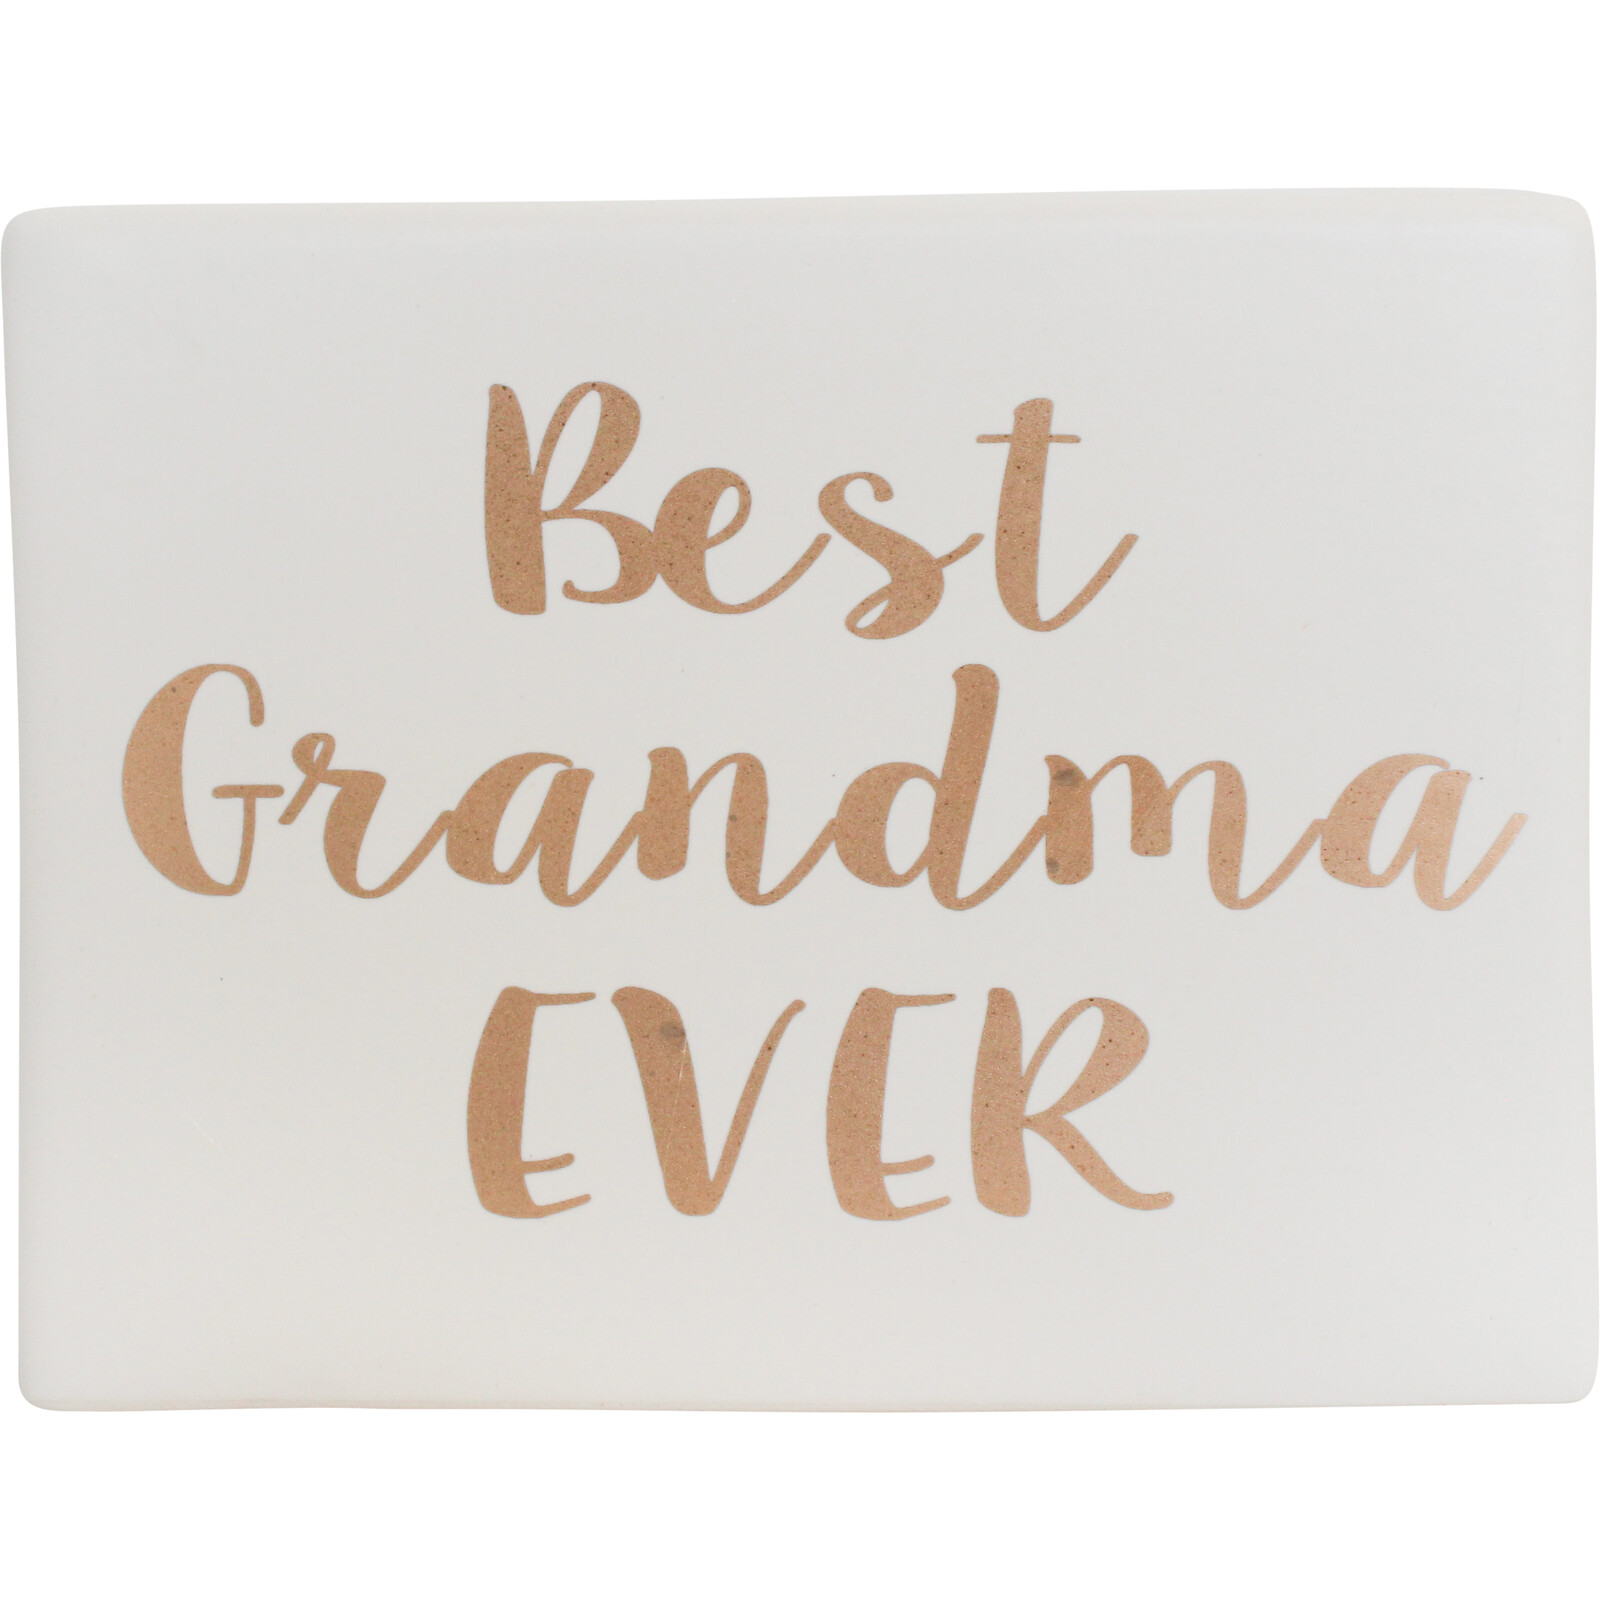 Ceramic Sign Best Grandma